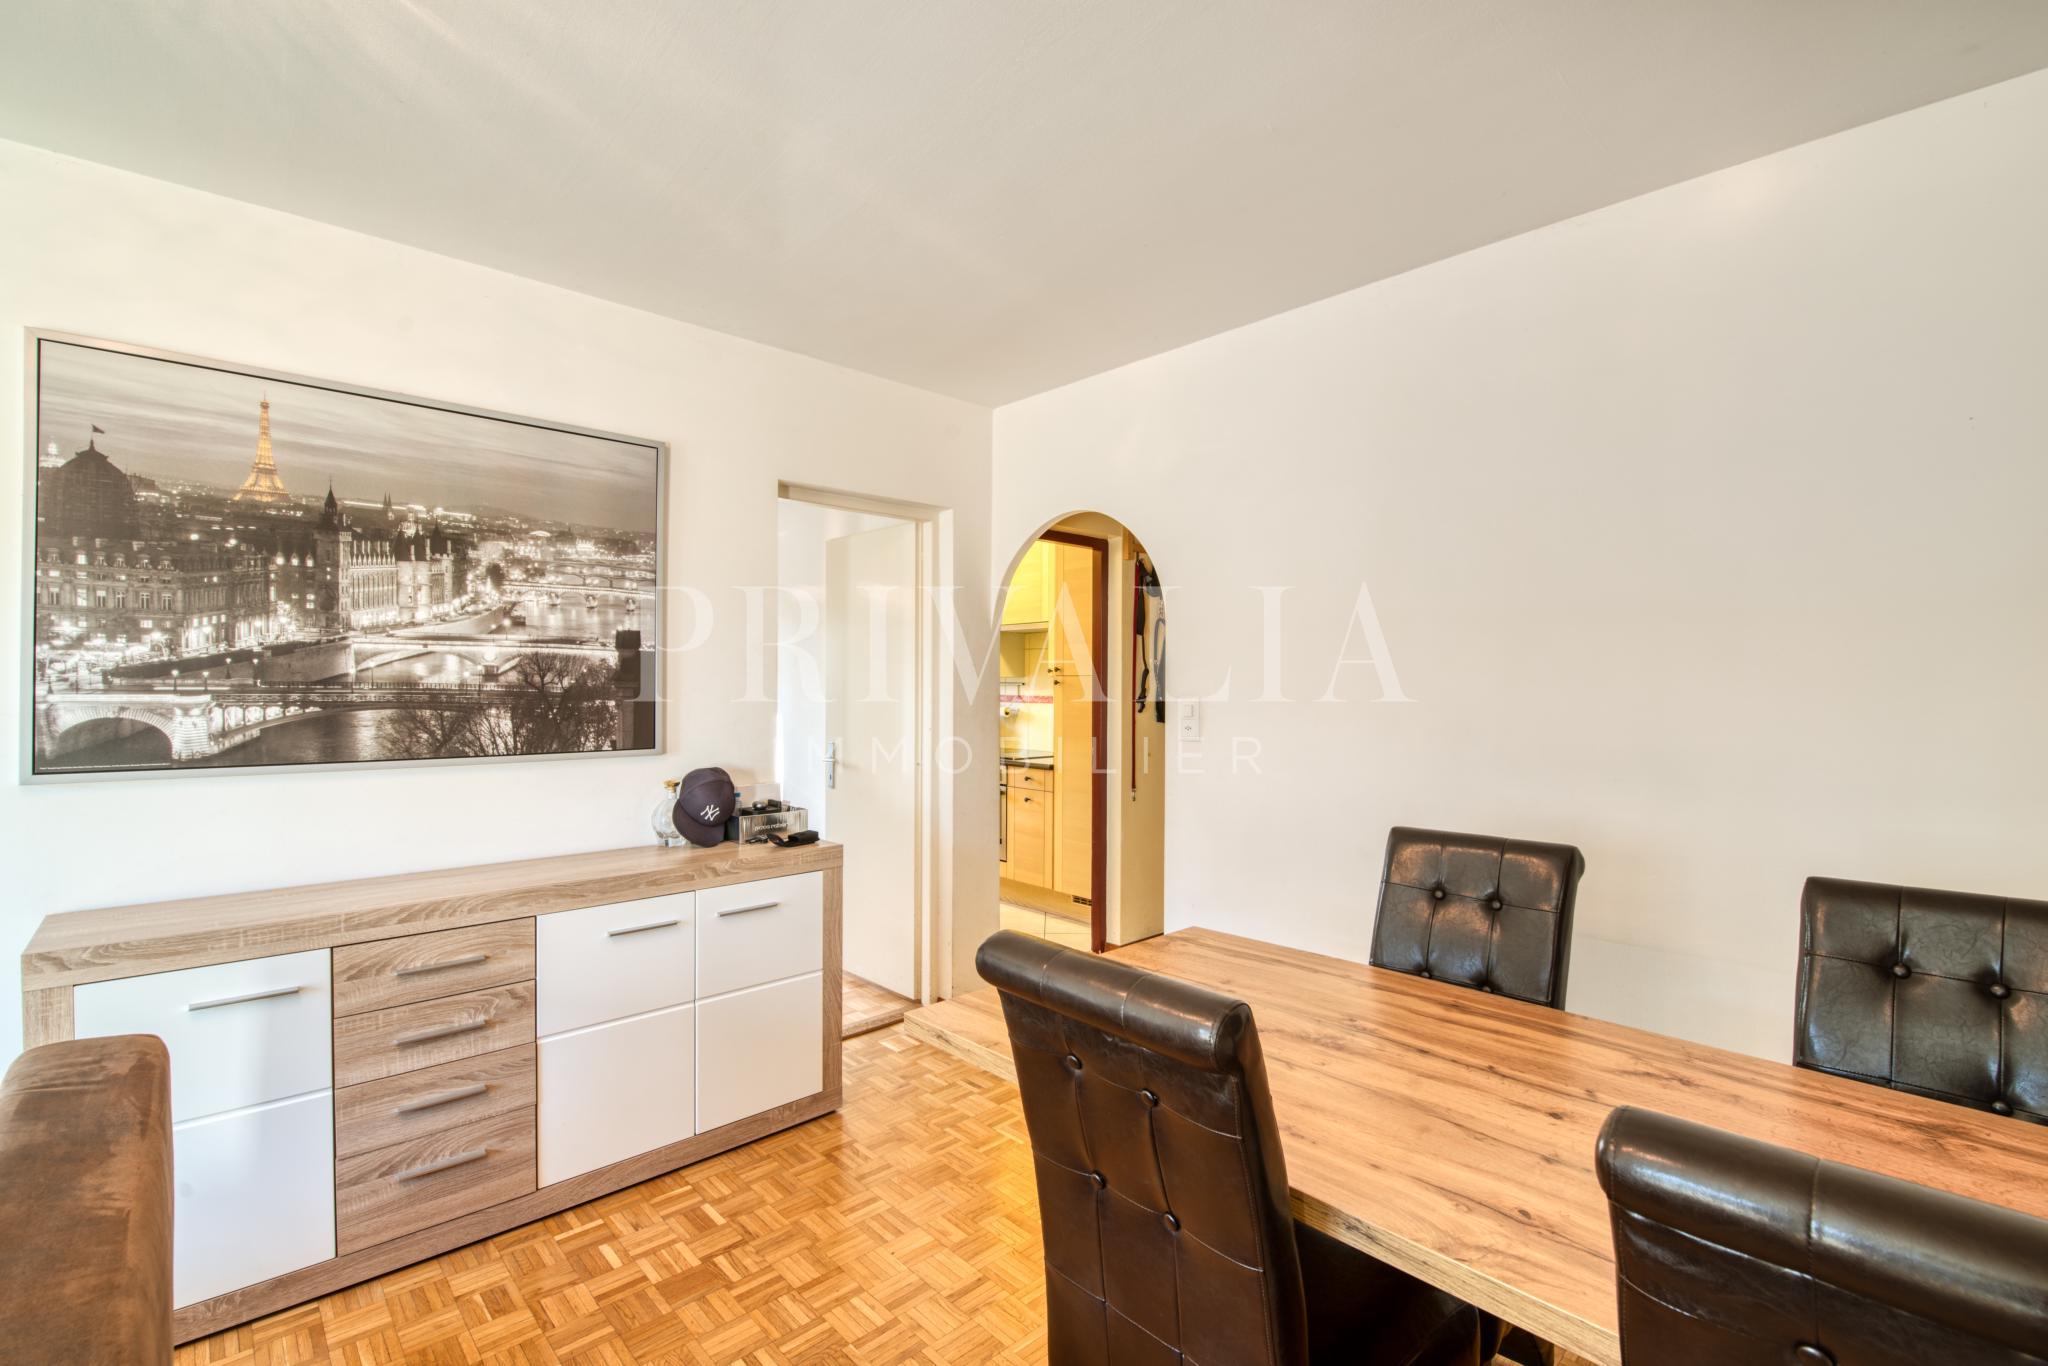 PrivaliaExclusivity : 5 room crossing gable flat in Versoix